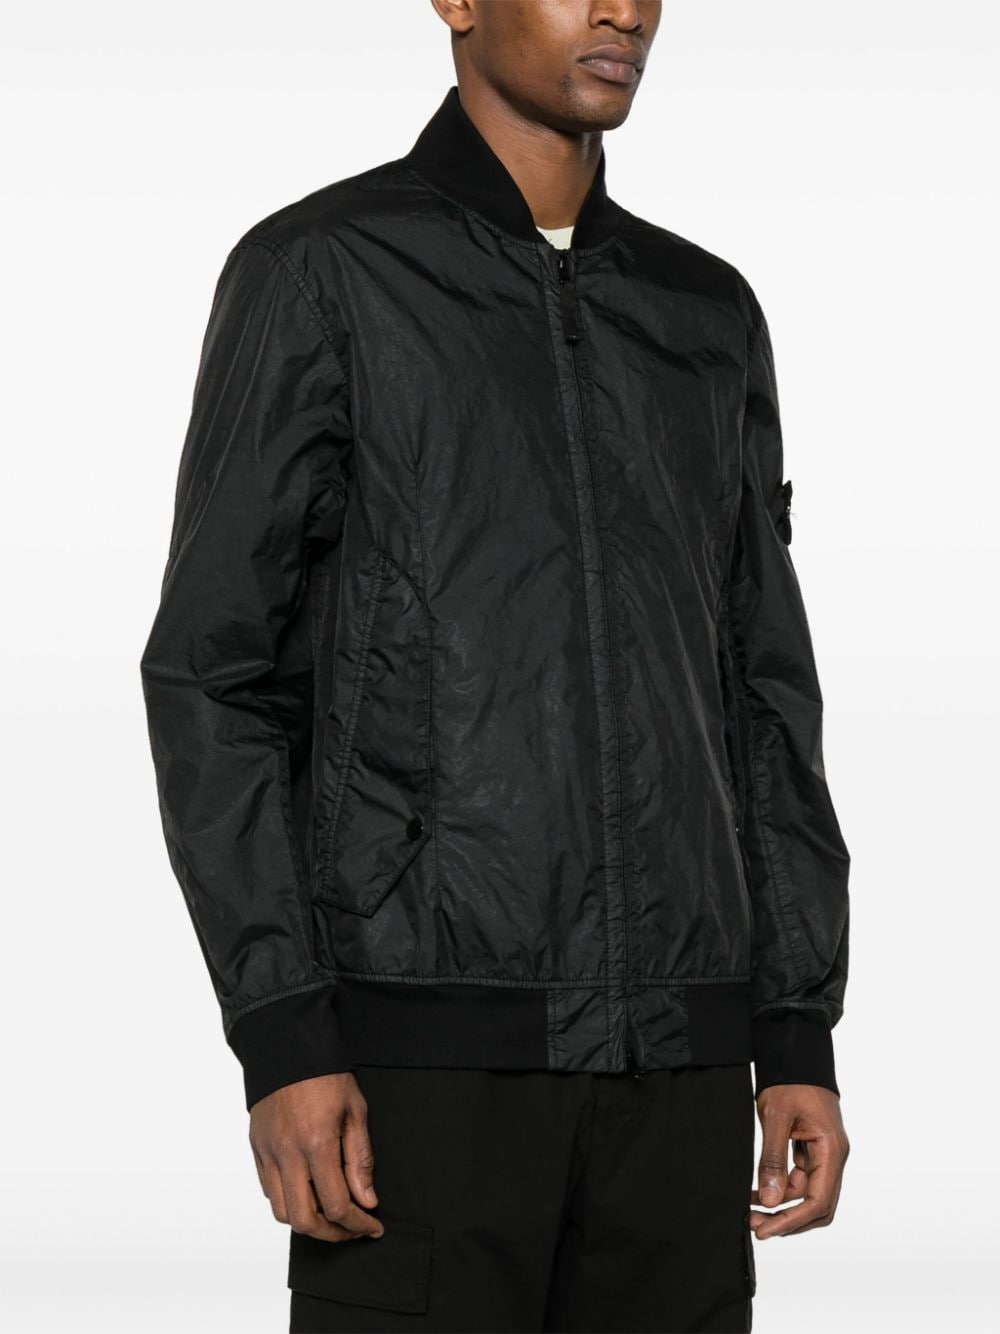 STONE ISLAND Black Membrana 3L TC Jacket for Men - SS24 Collection